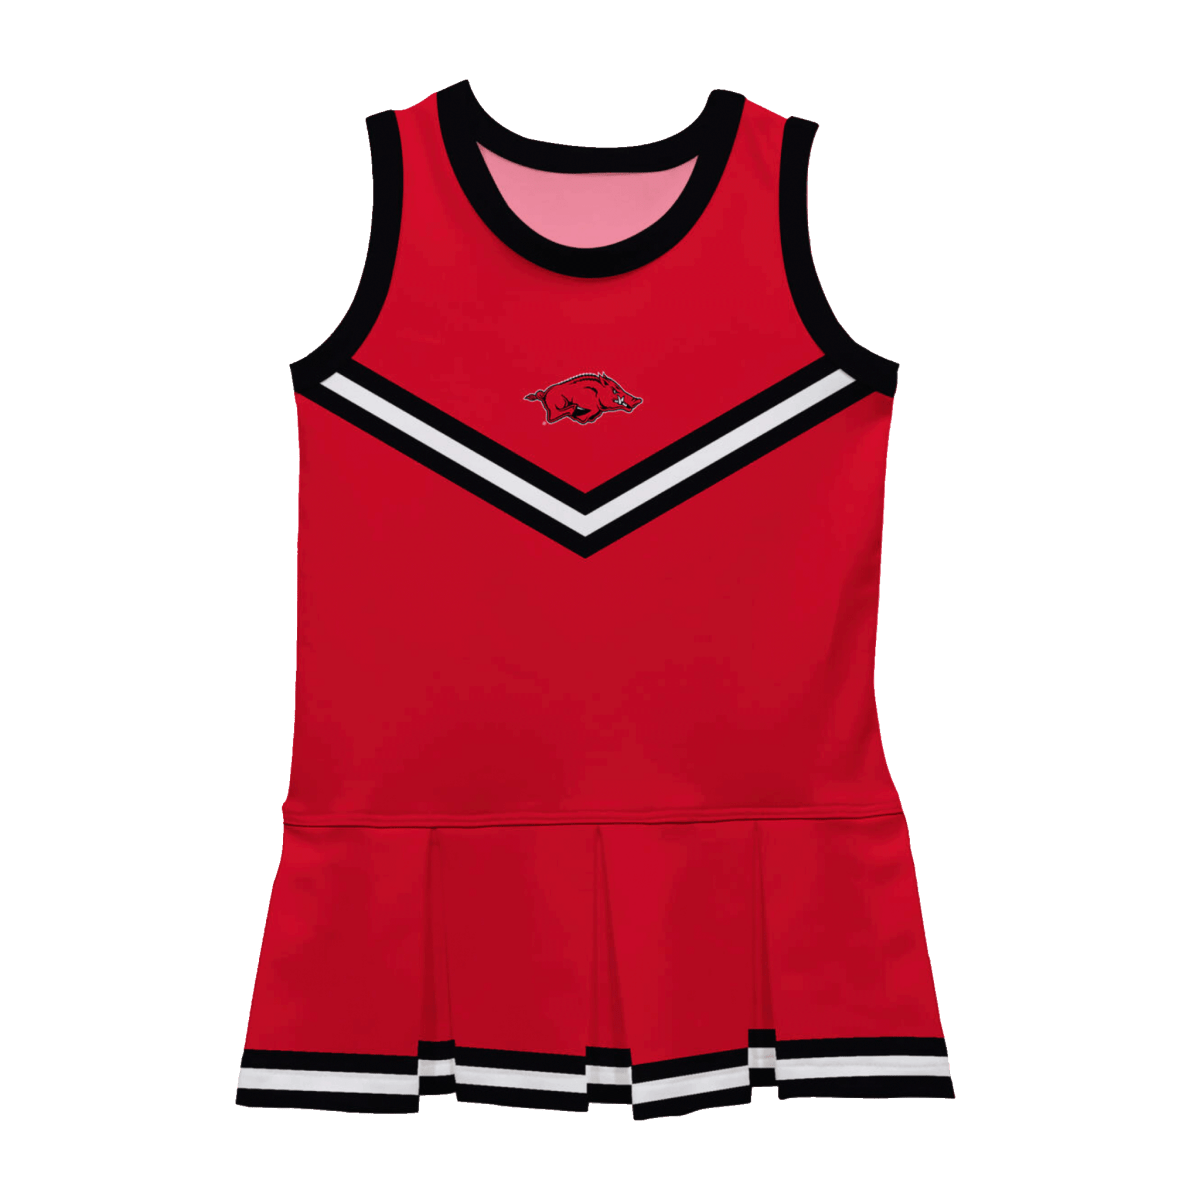 University of Arkansas Sleeveless Cheerleader Dress - Shop B-Unlimited